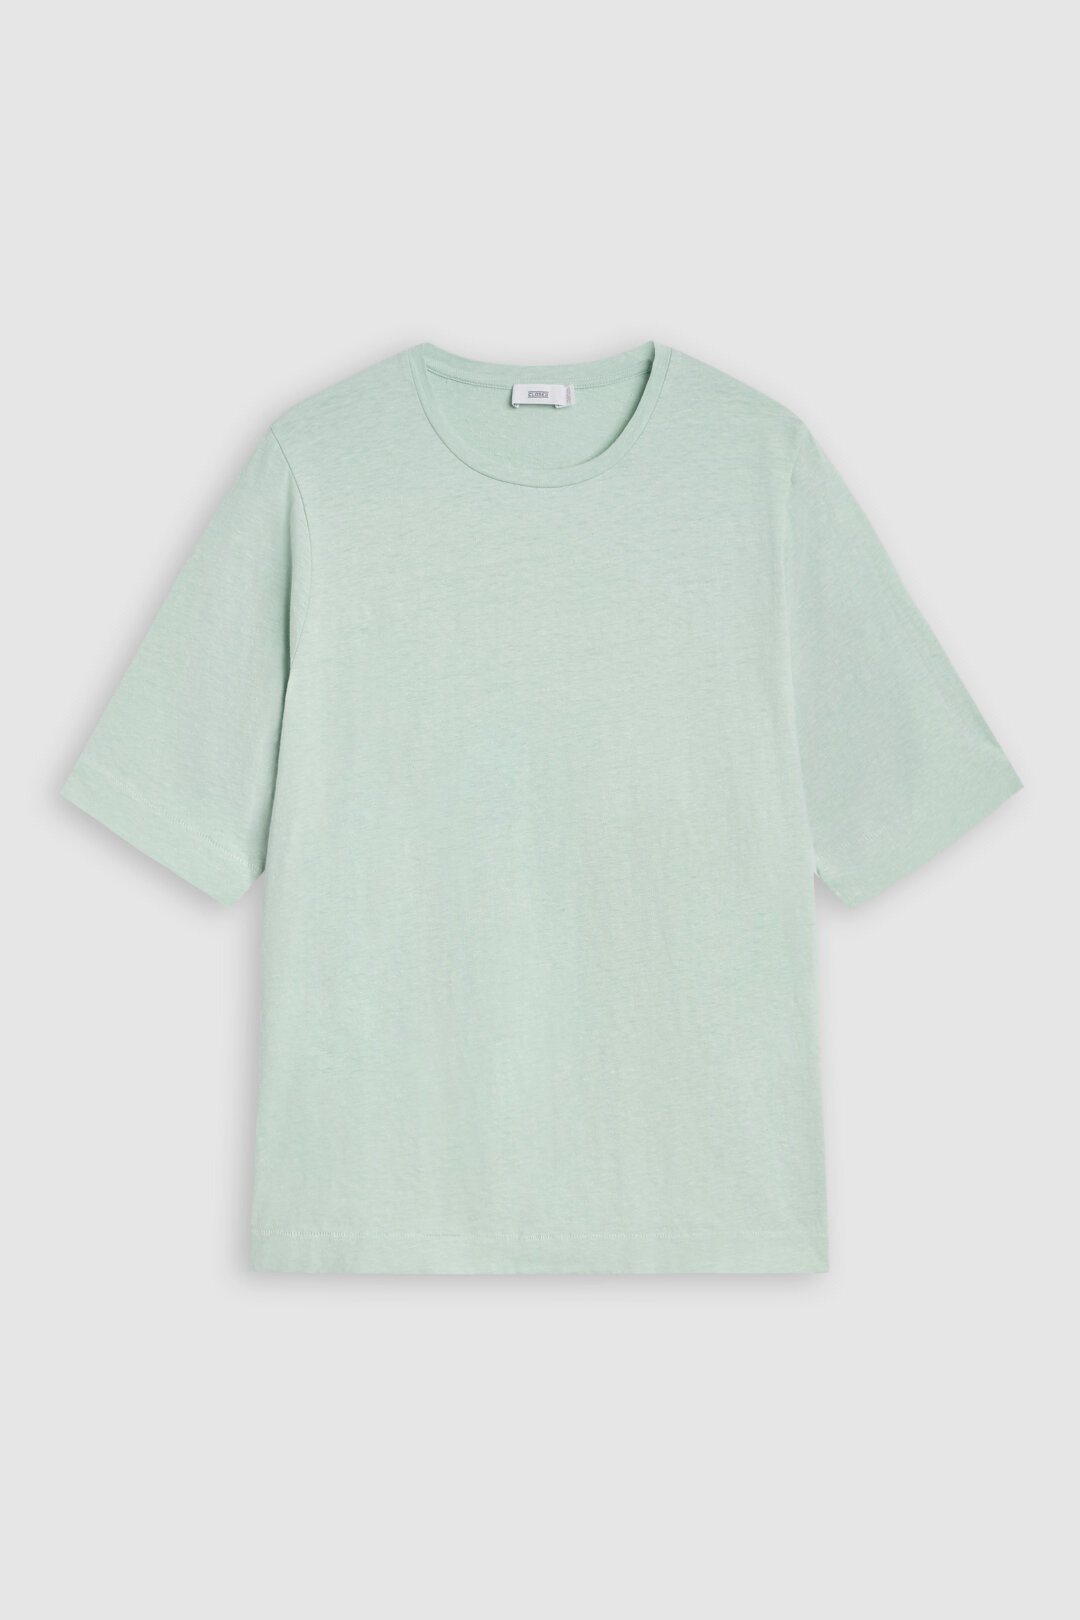 T-shirt wide sleeve 675 Fresh mint-4